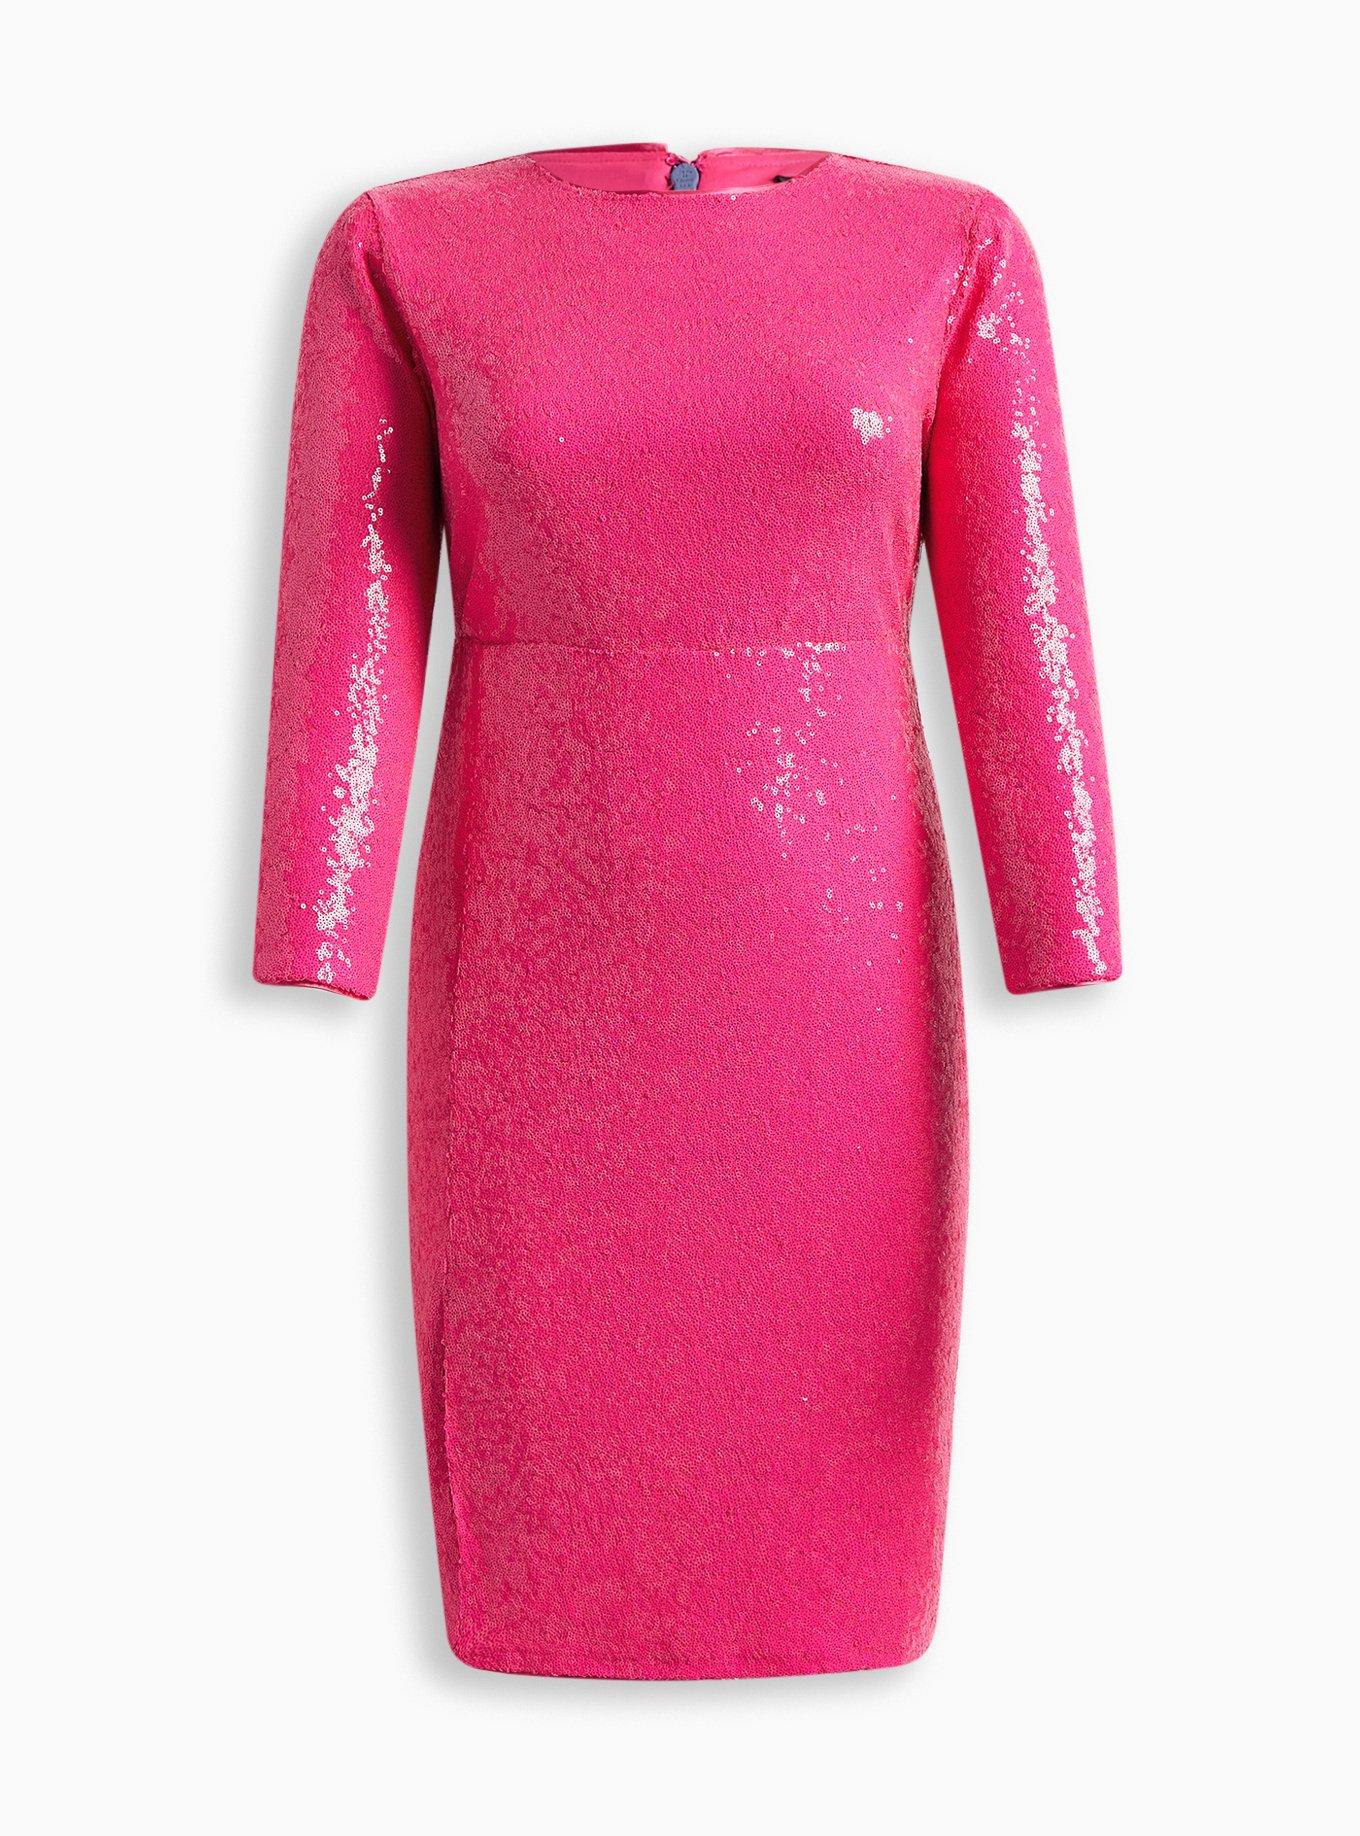 Second Life Marketplace - SLC Mesh Strapless Glitter Dress *6